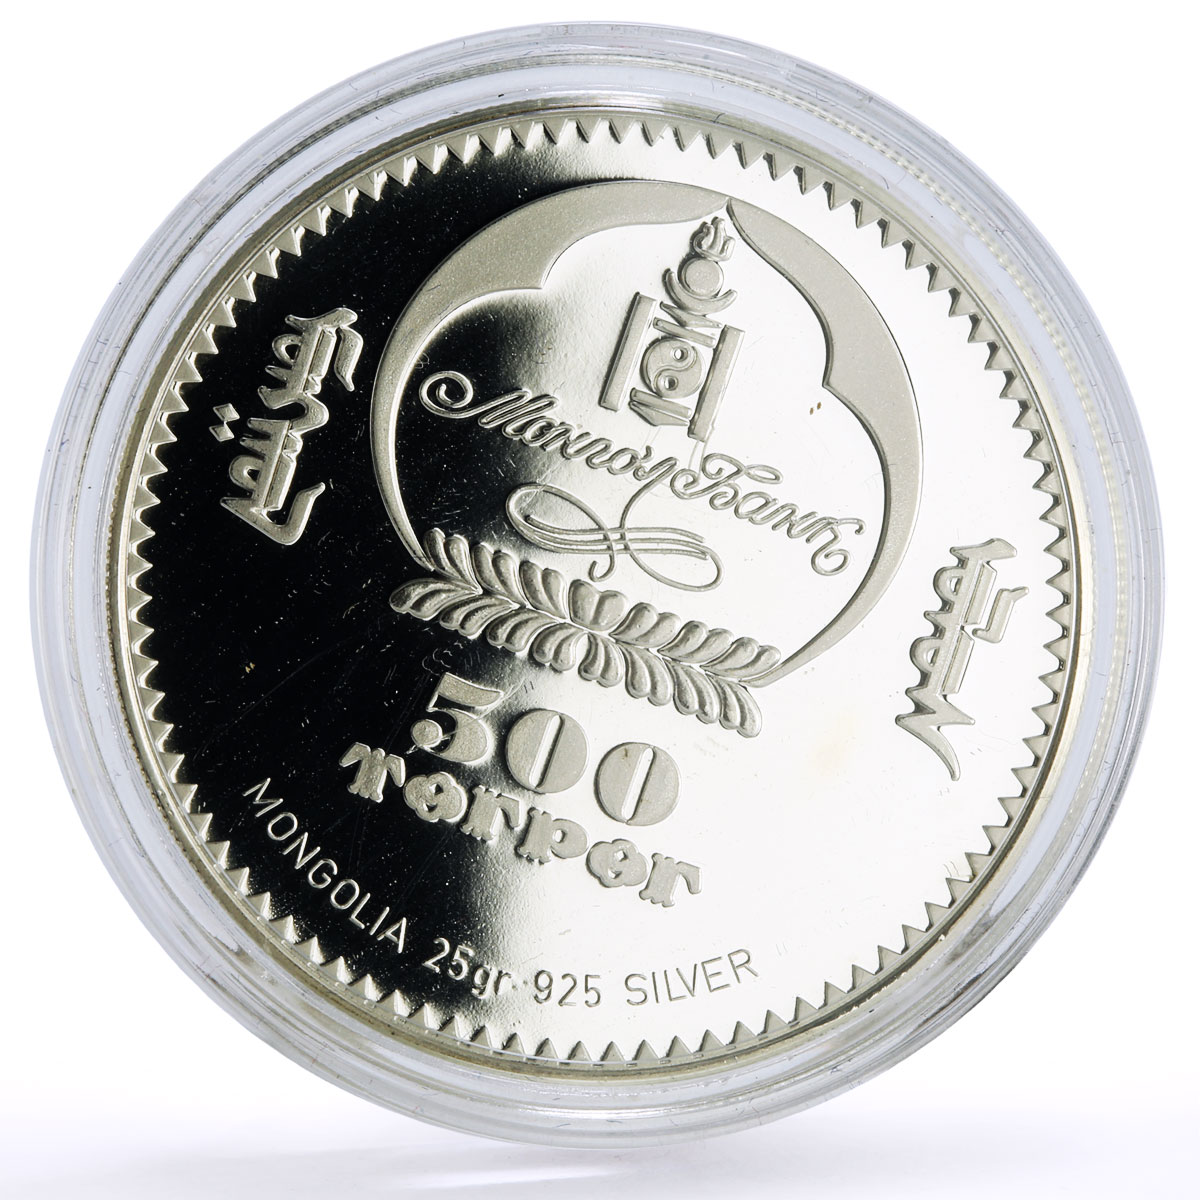 Mongolia 500 togrog New Wonders Mexico Chichen Itza colored silver coin 2008